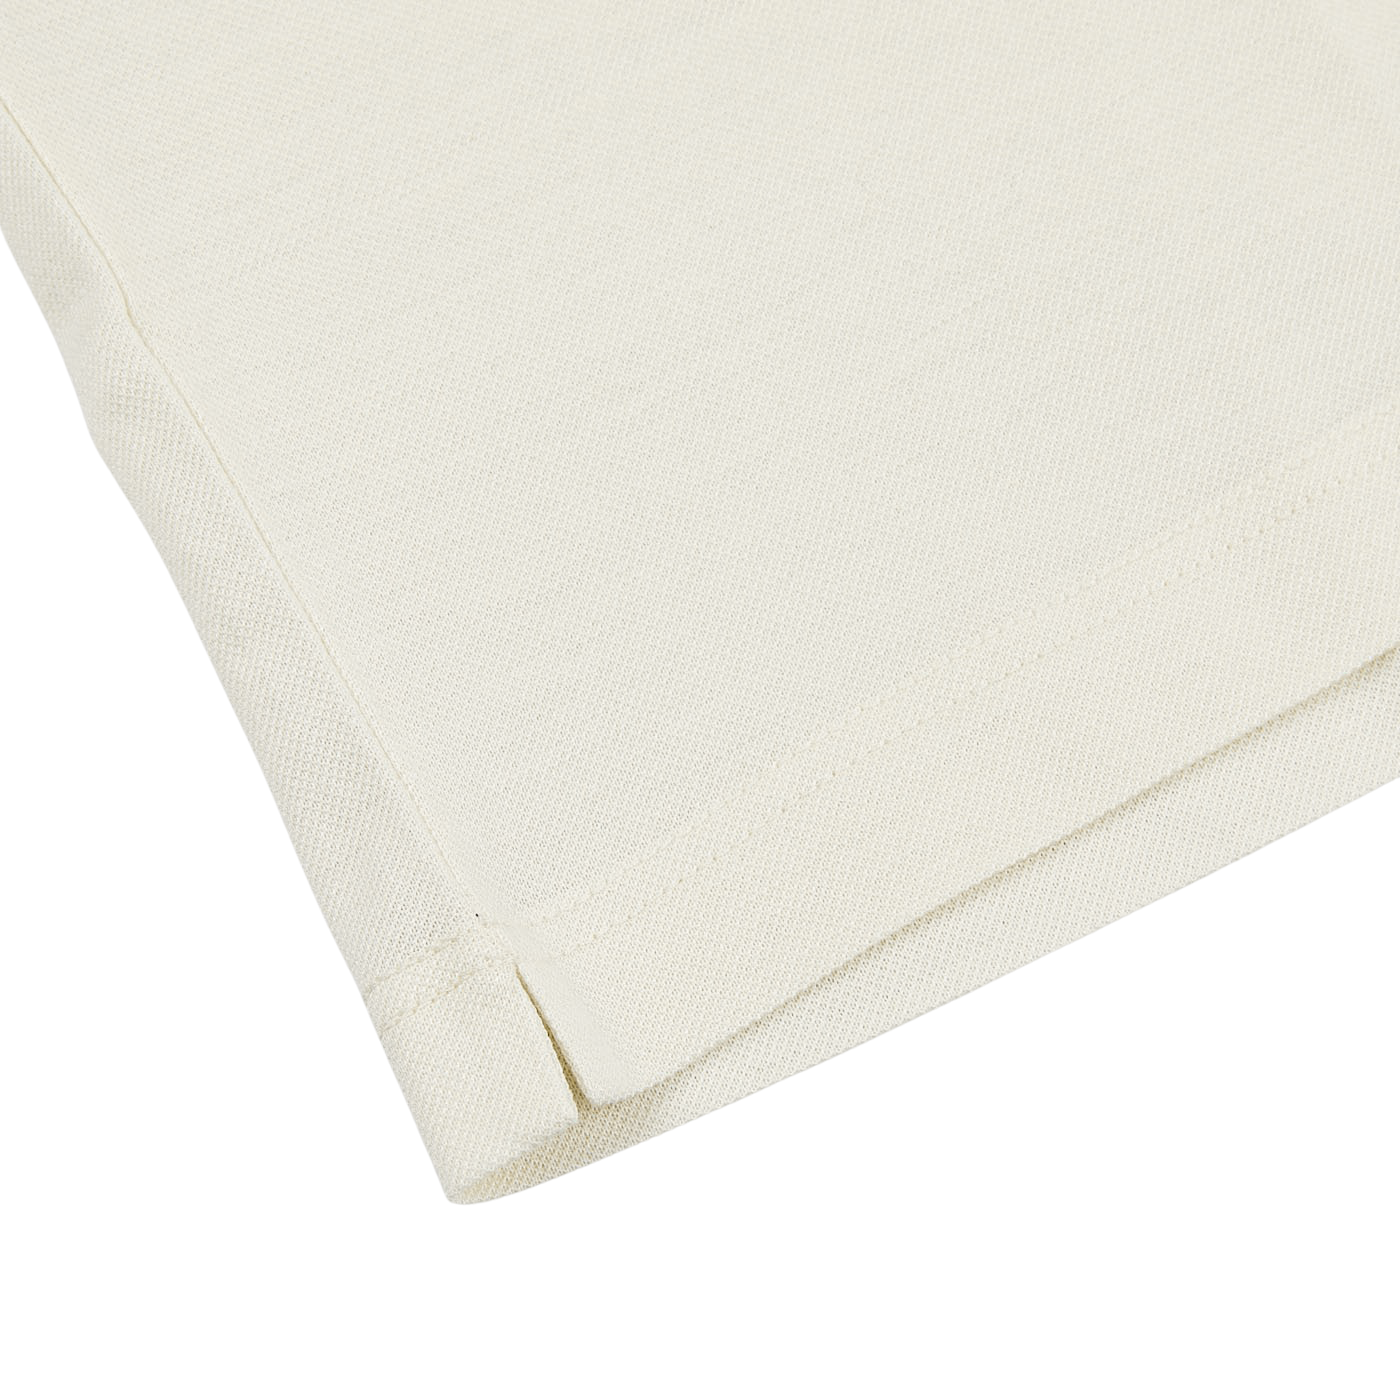 A Cream Beige Filo Scozia Zip Polo Shirt by Gran Sasso on a white surface.